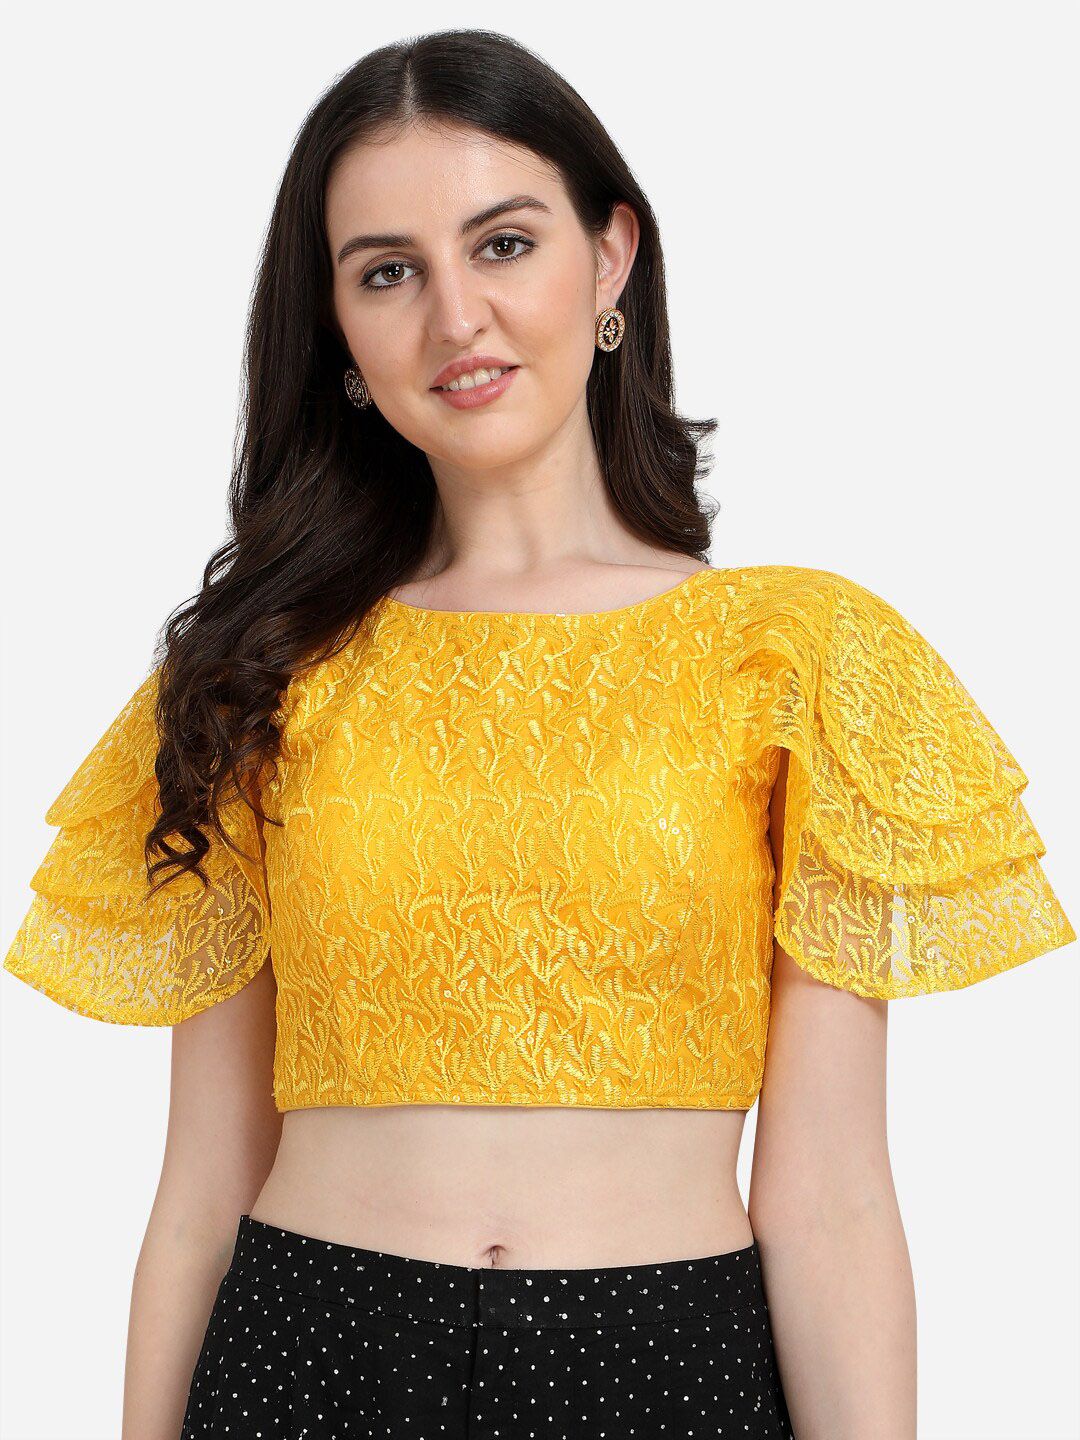 Fab Dadu Yellow Embroidered Saree Blouse Price in India